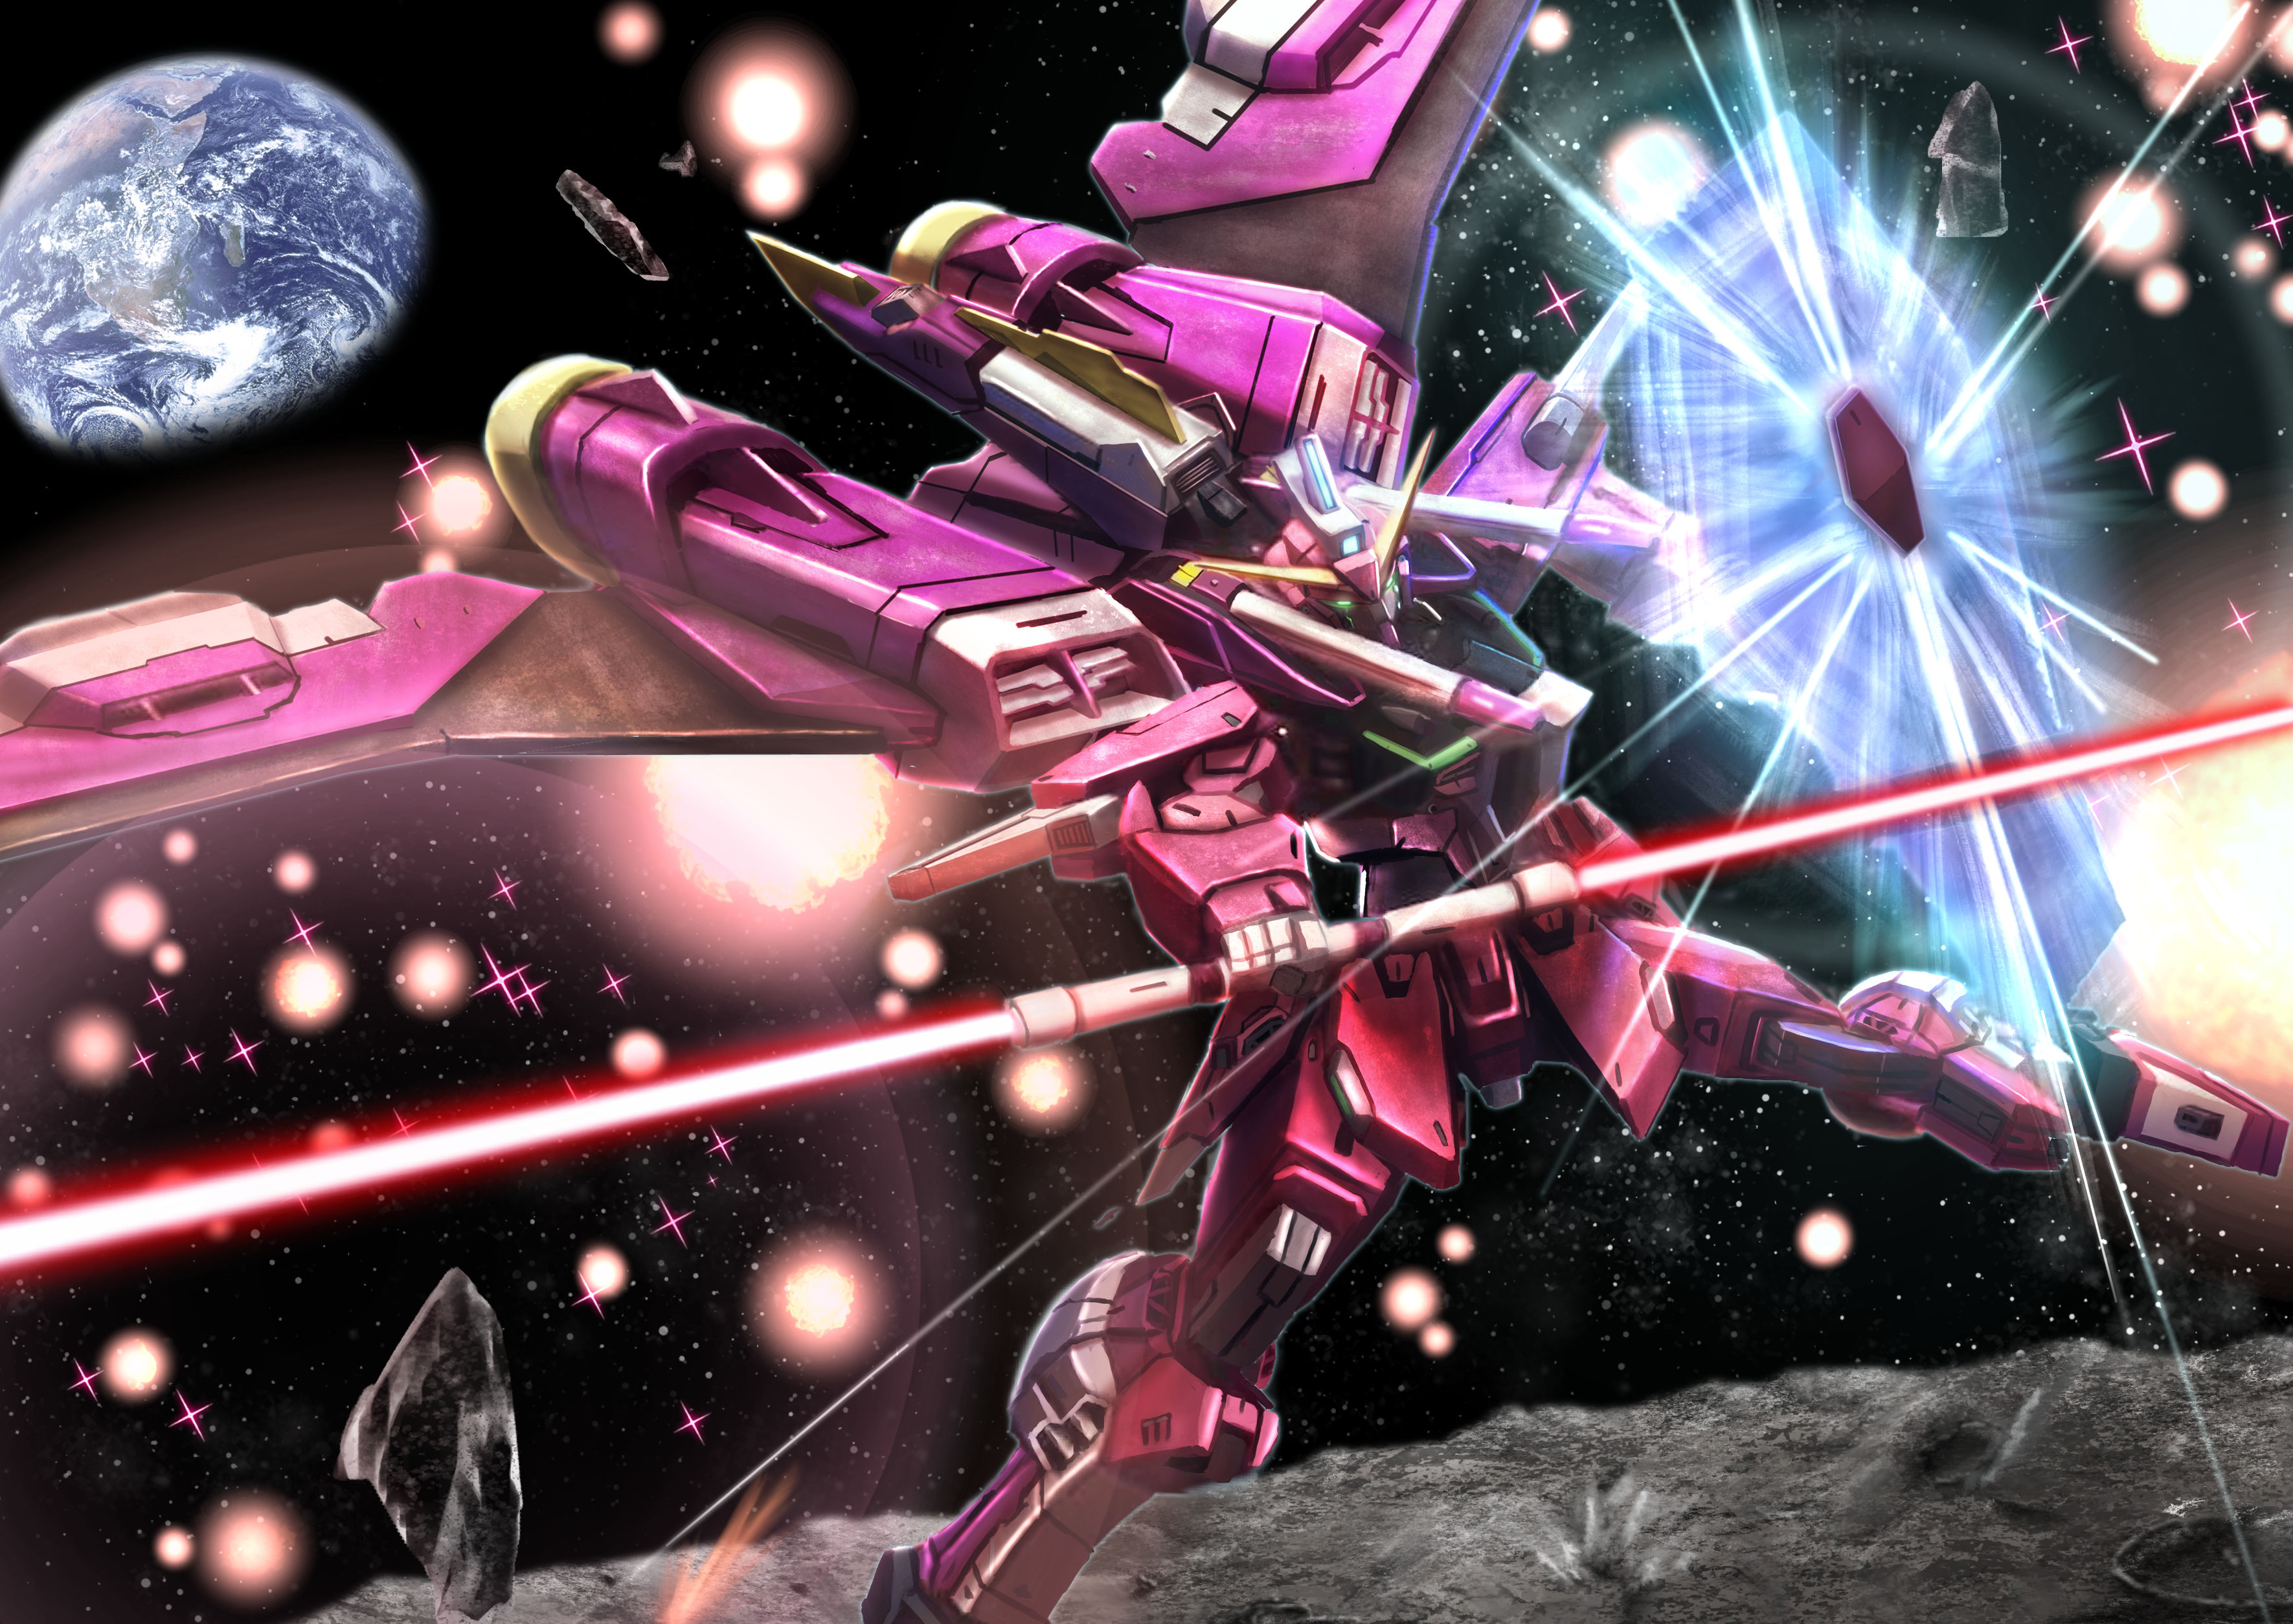 Anime 3541x2508 anime mechs Gundam Mobile Suit Gundam SEED Destiny Super Robot Taisen Infinite Justice Gundam artwork digital art fan art